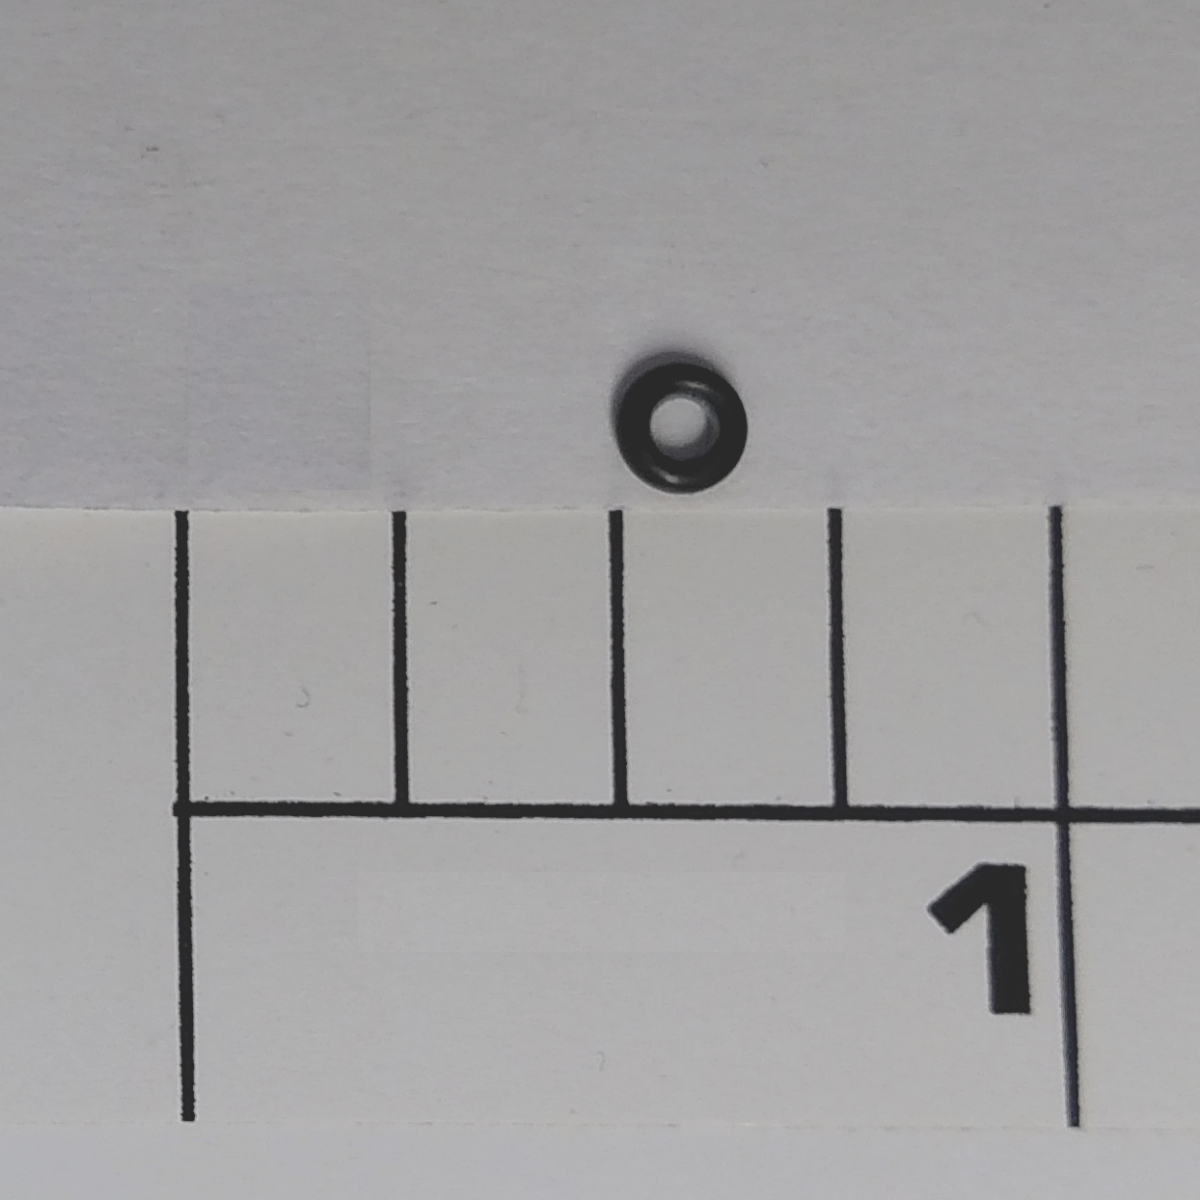 38C-965 'O' ring (O-ring), for Screw, O-ring (uses 2)